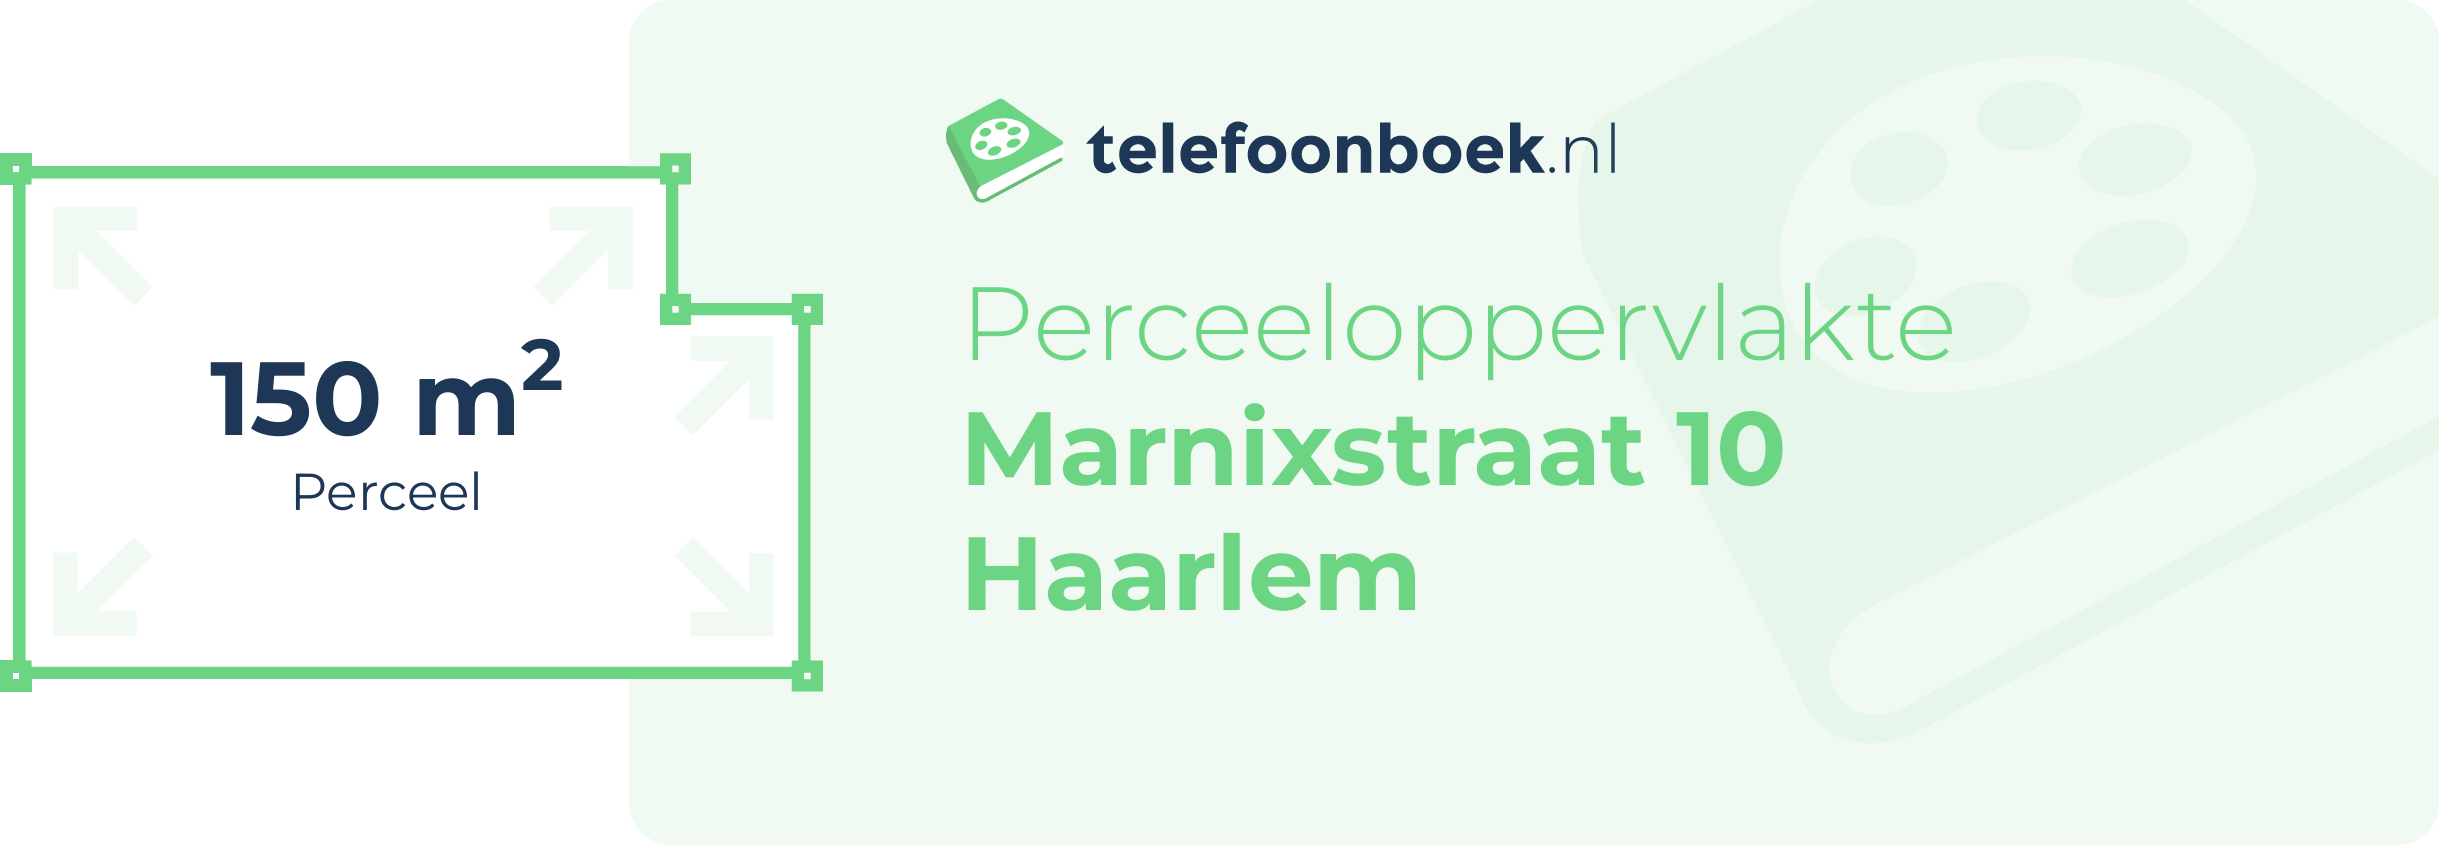 Perceeloppervlakte Marnixstraat 10 Haarlem